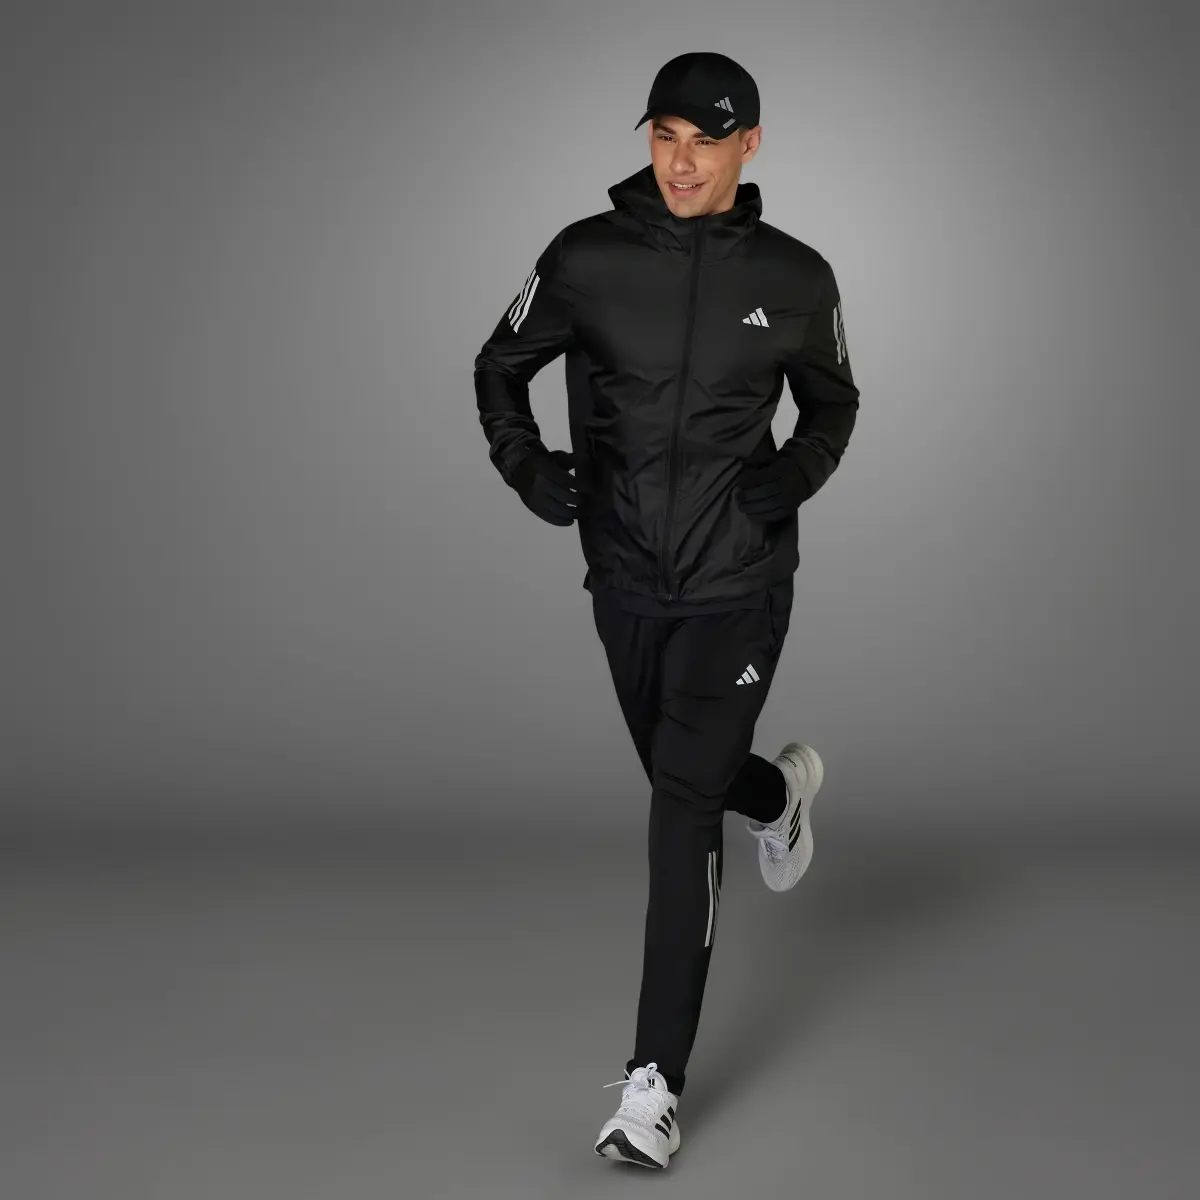 Adidas Own the Run Jacket. 3